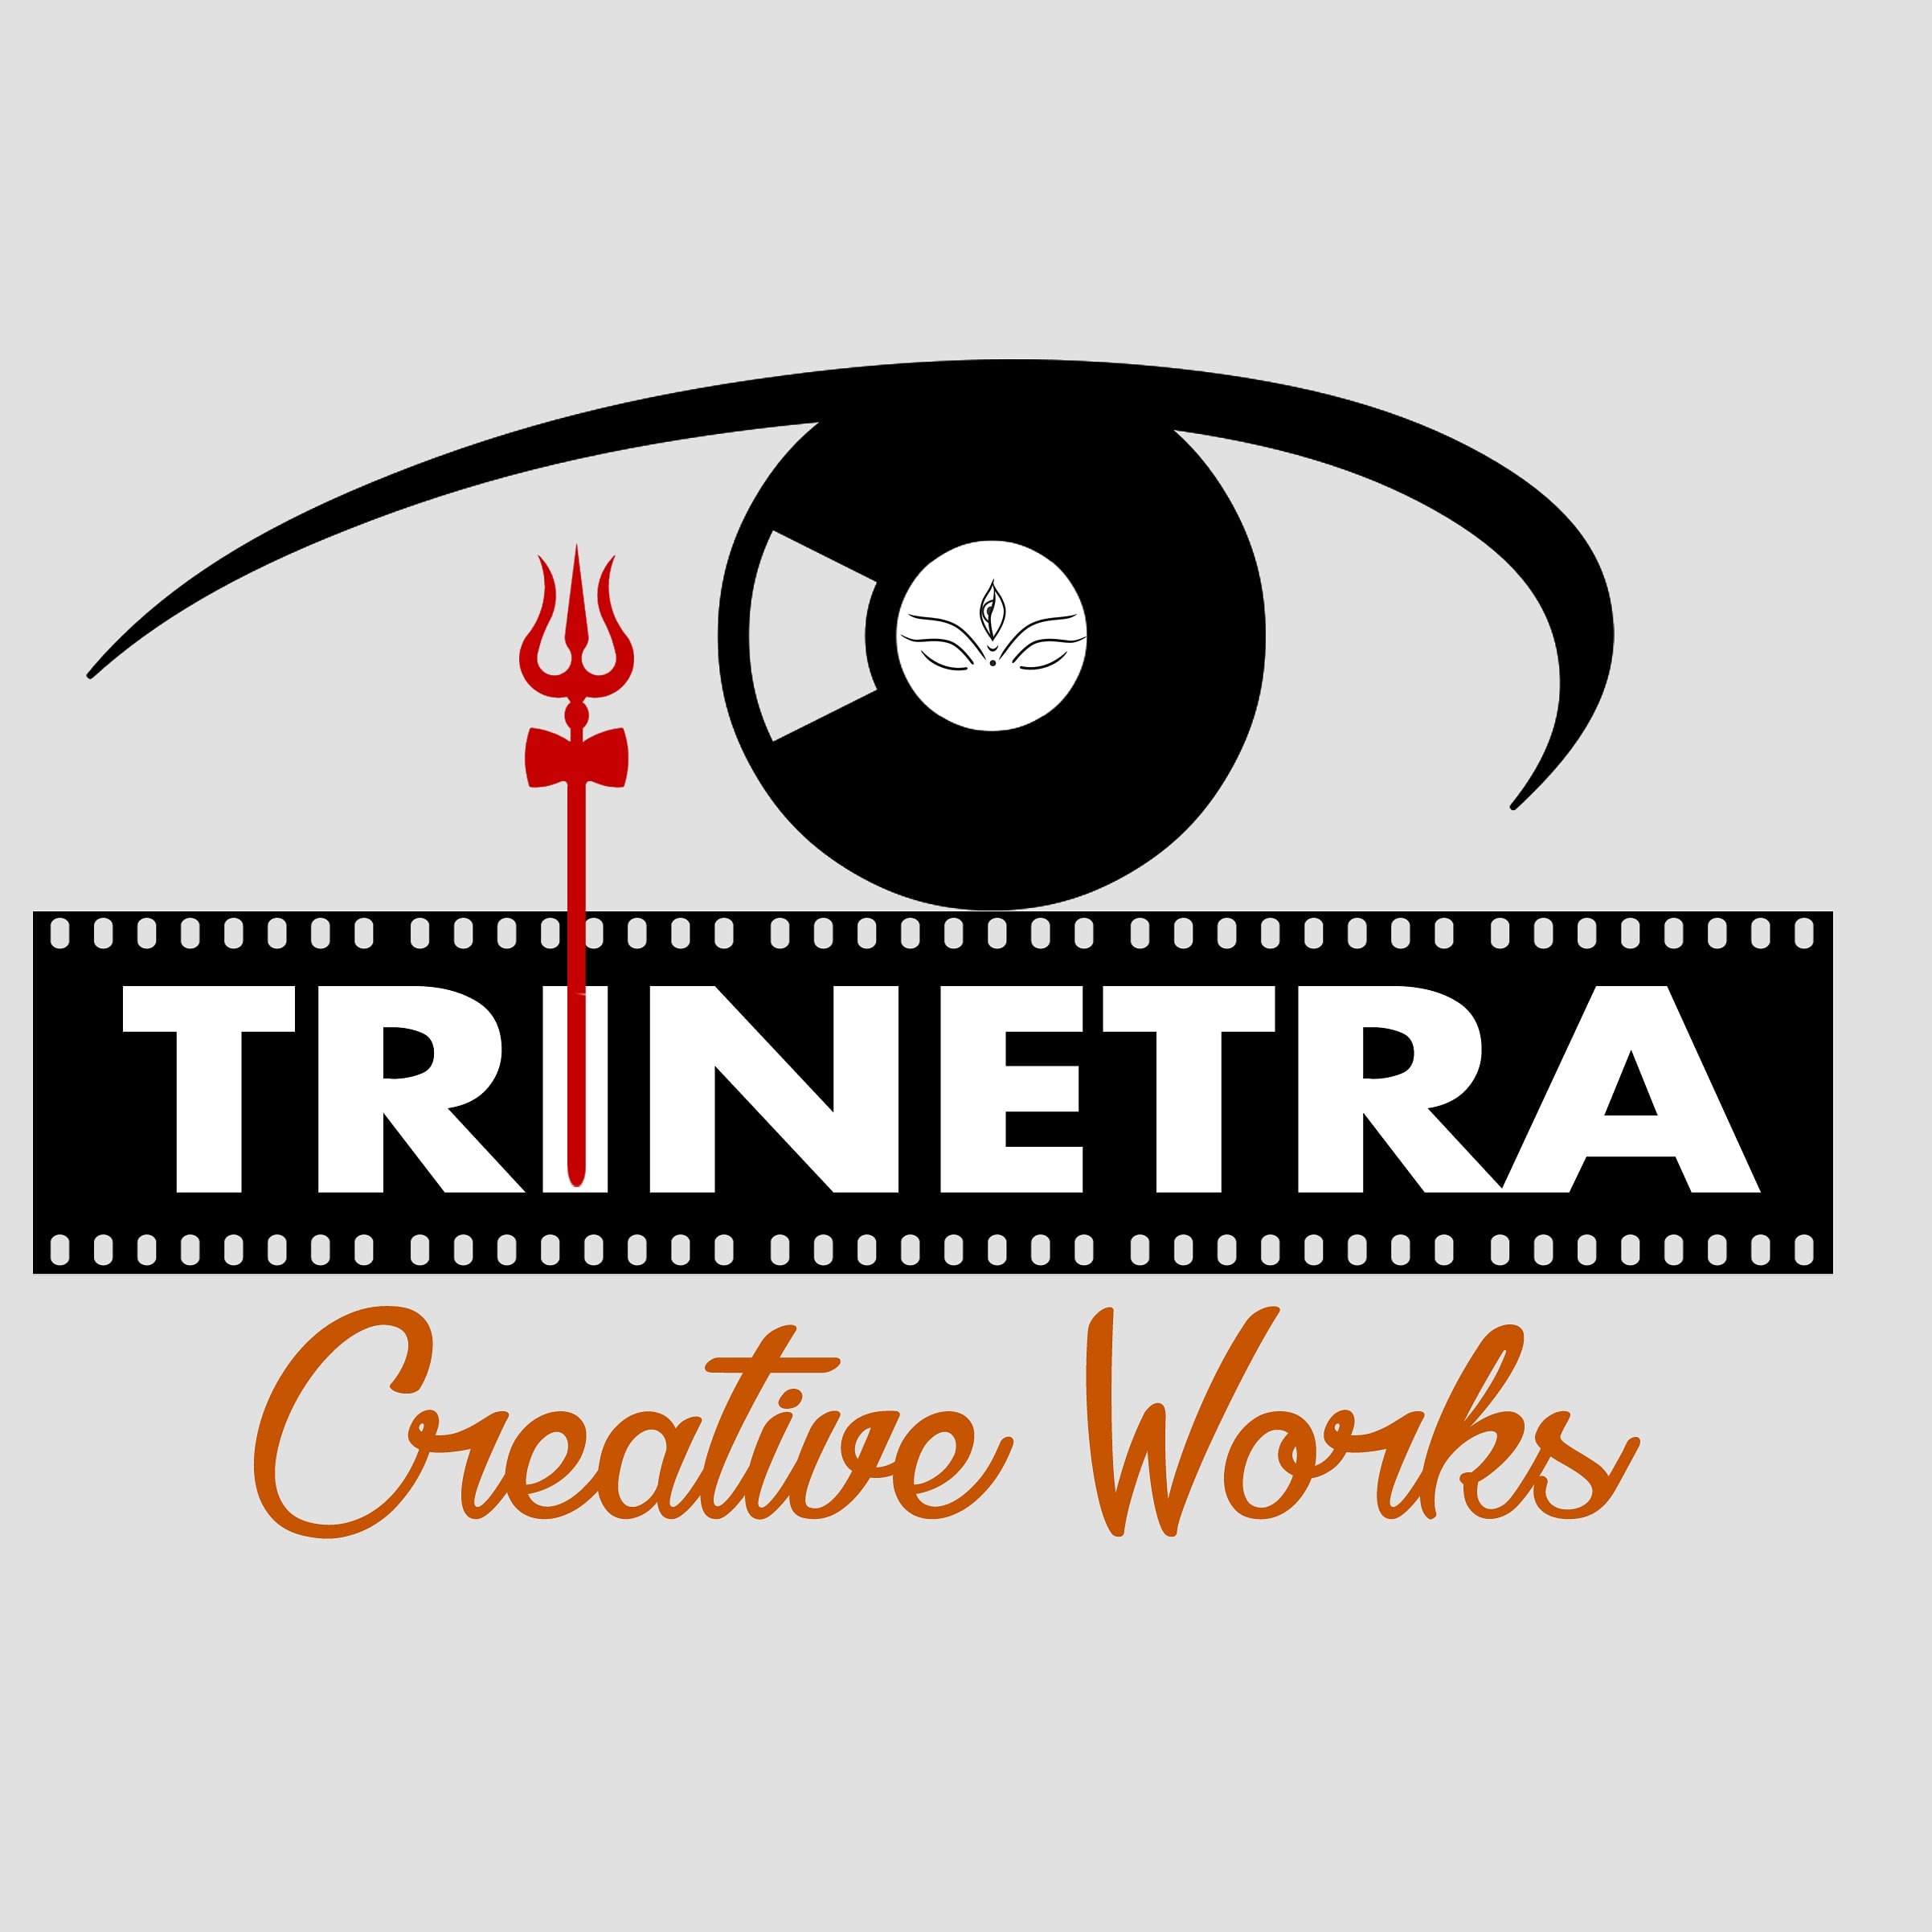 Trinethra Creative Works